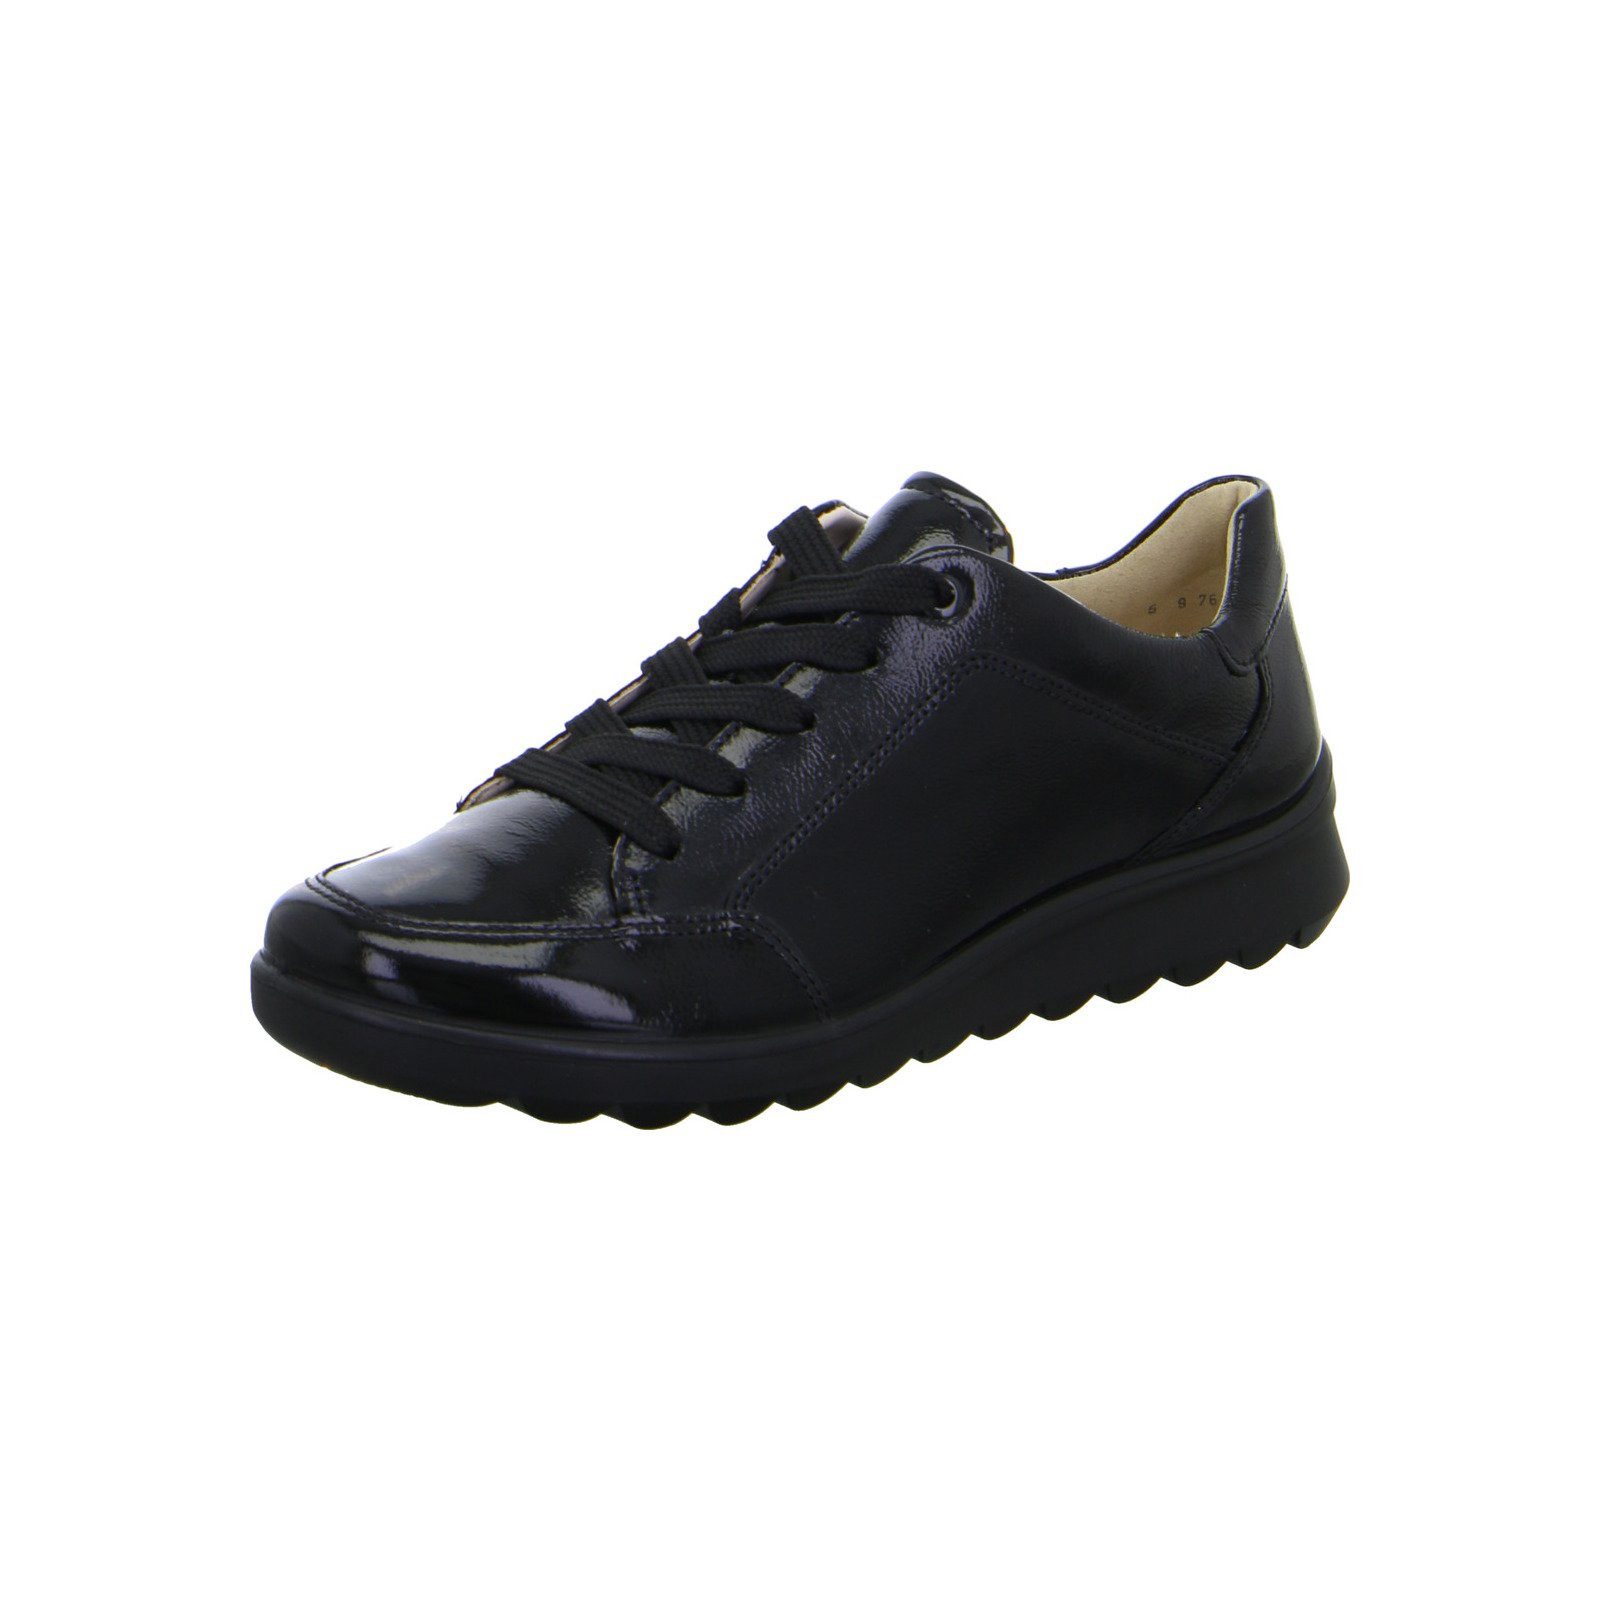 Ara Toronto - Damen Schuhe Schnürschuh Sneaker Lackleder schwarz